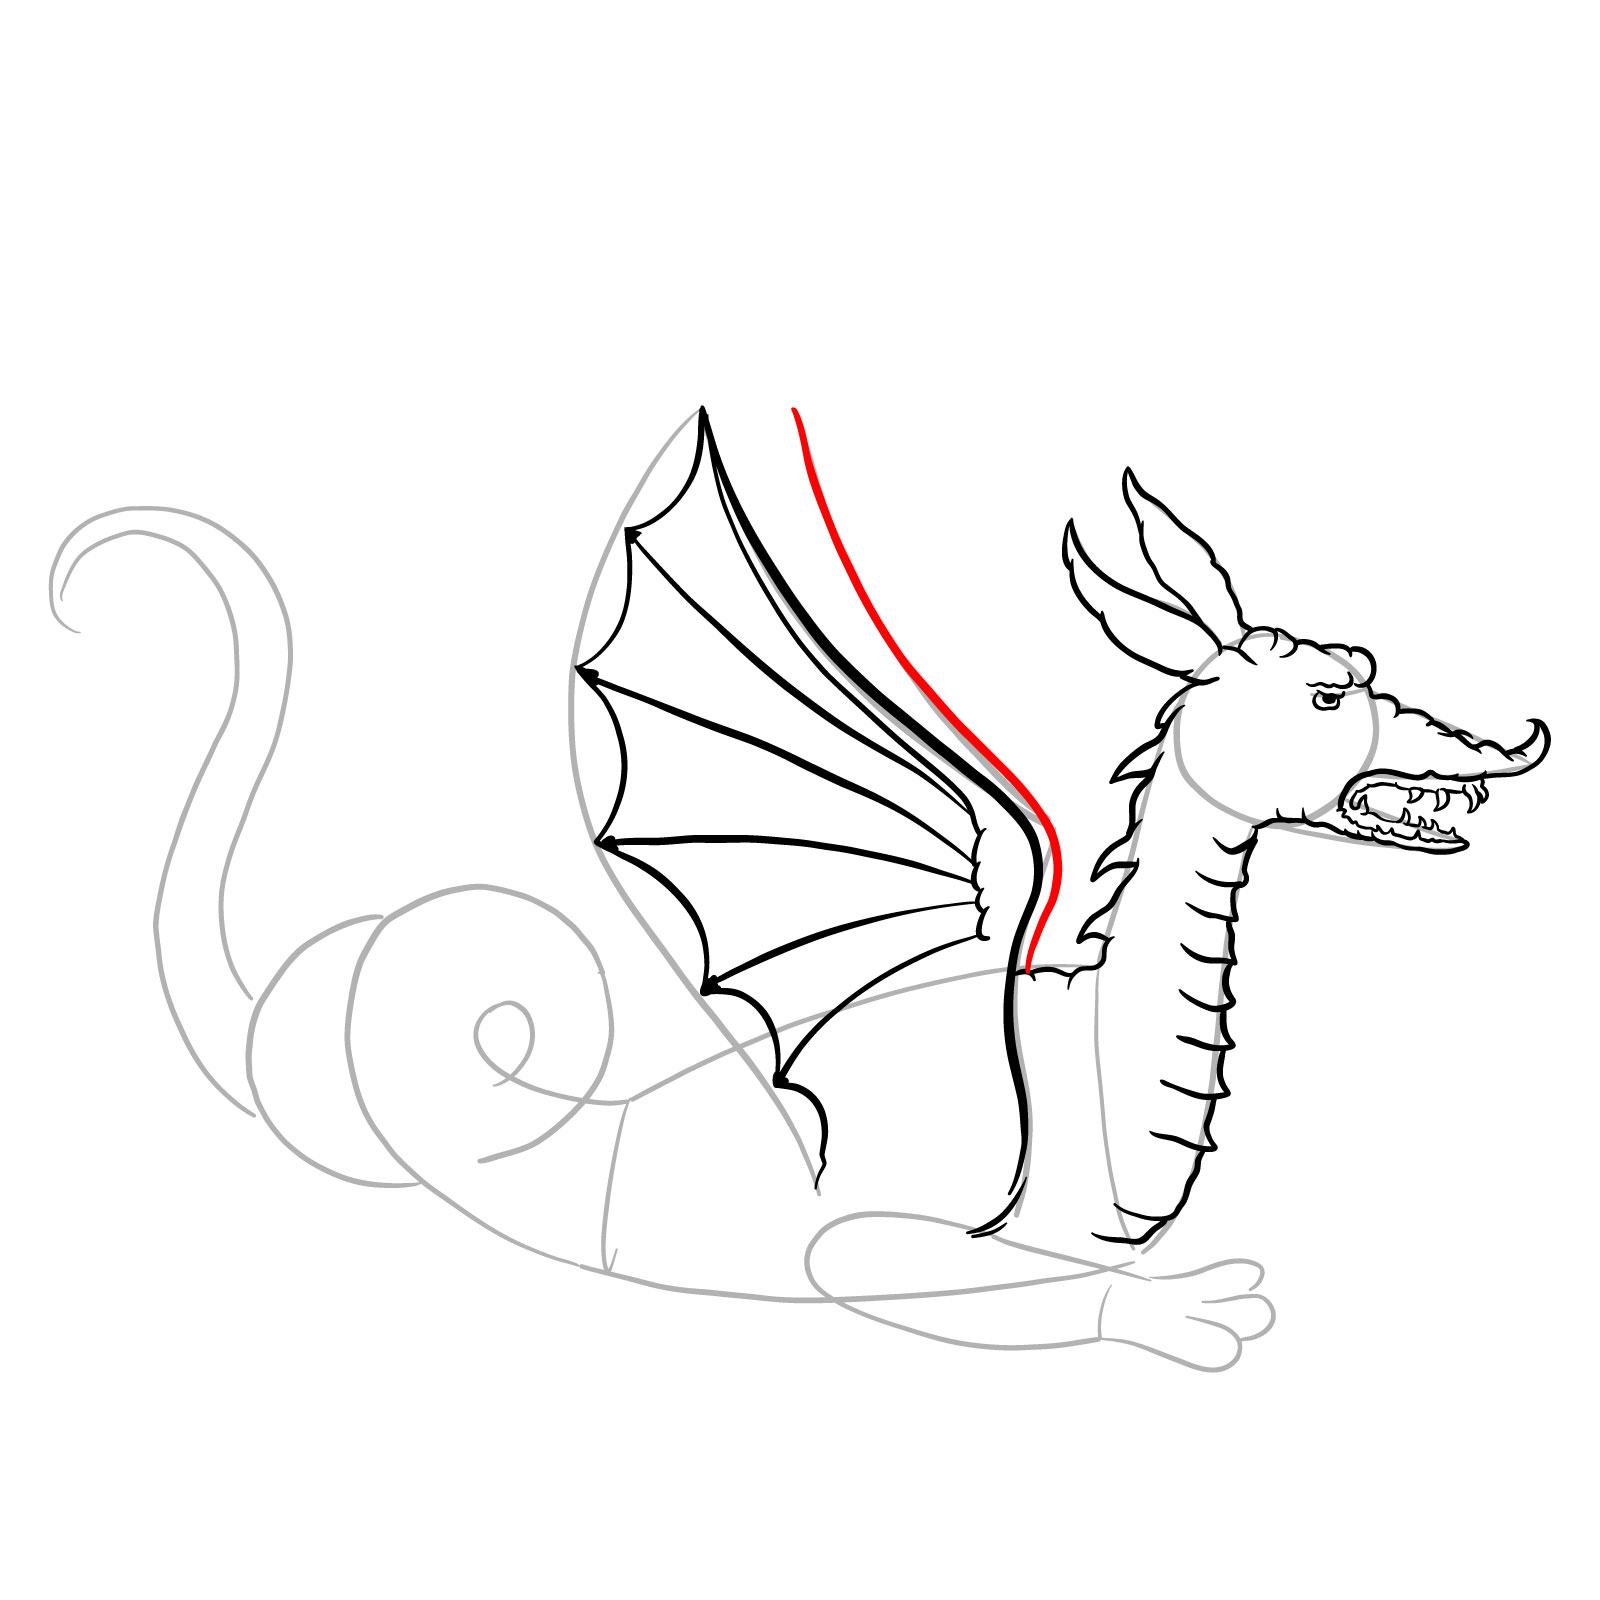 How to draw a Knucker dragon - step 16